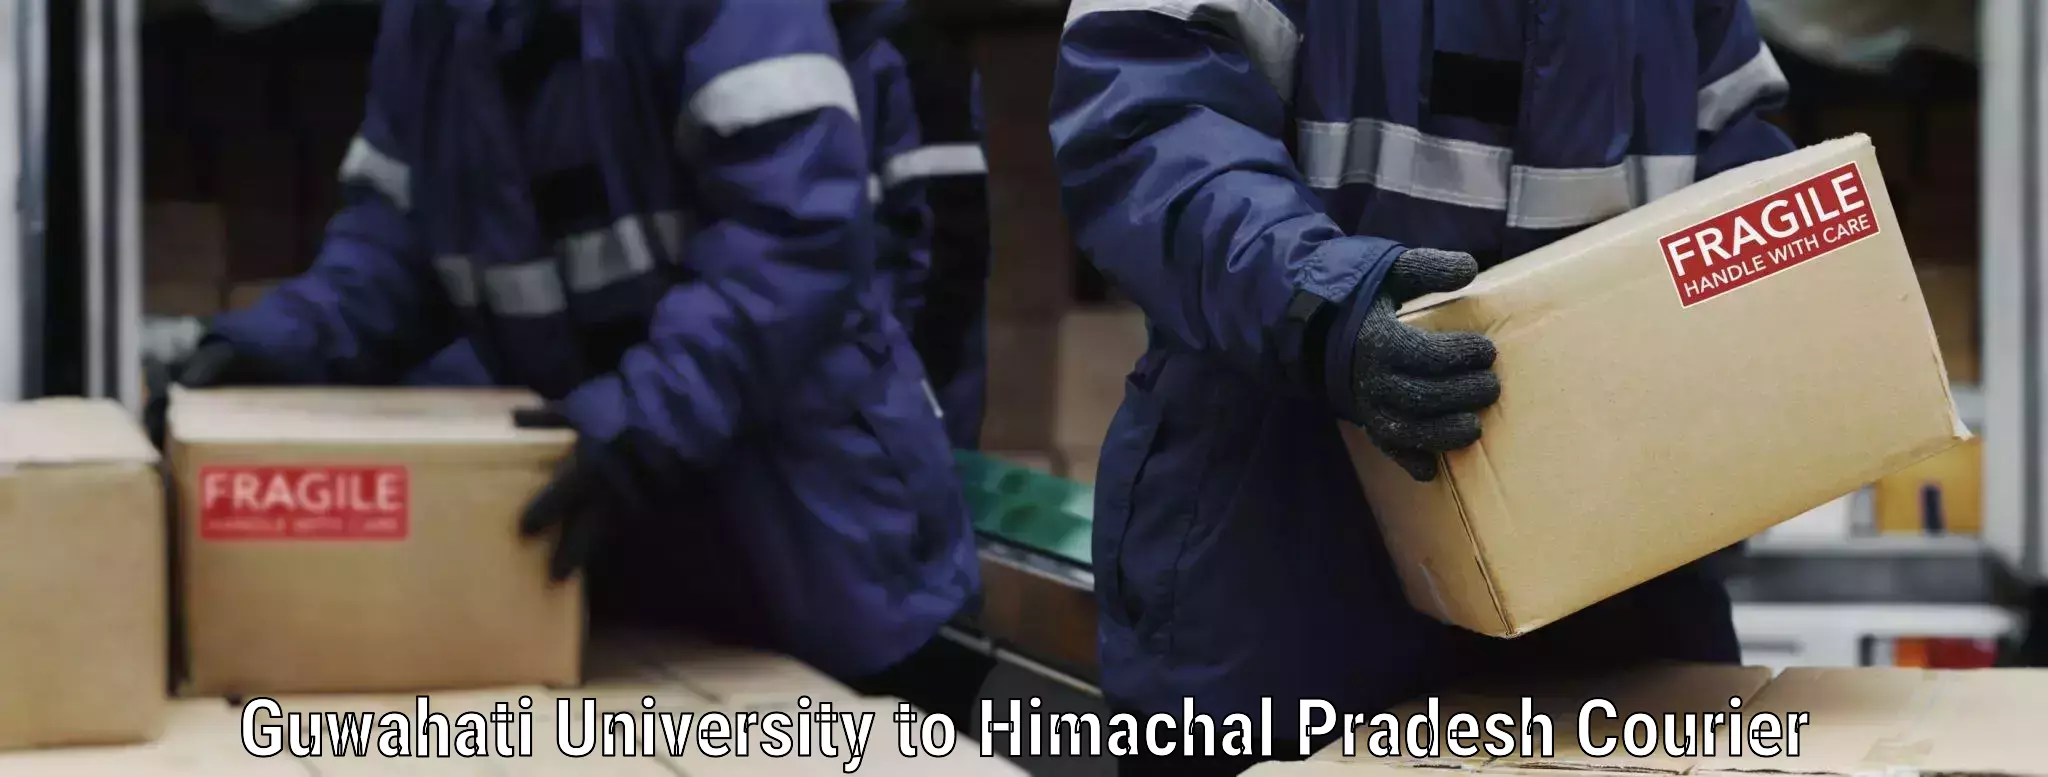 Moving and handling services Guwahati University to Bilaspur Himachal Pradesh